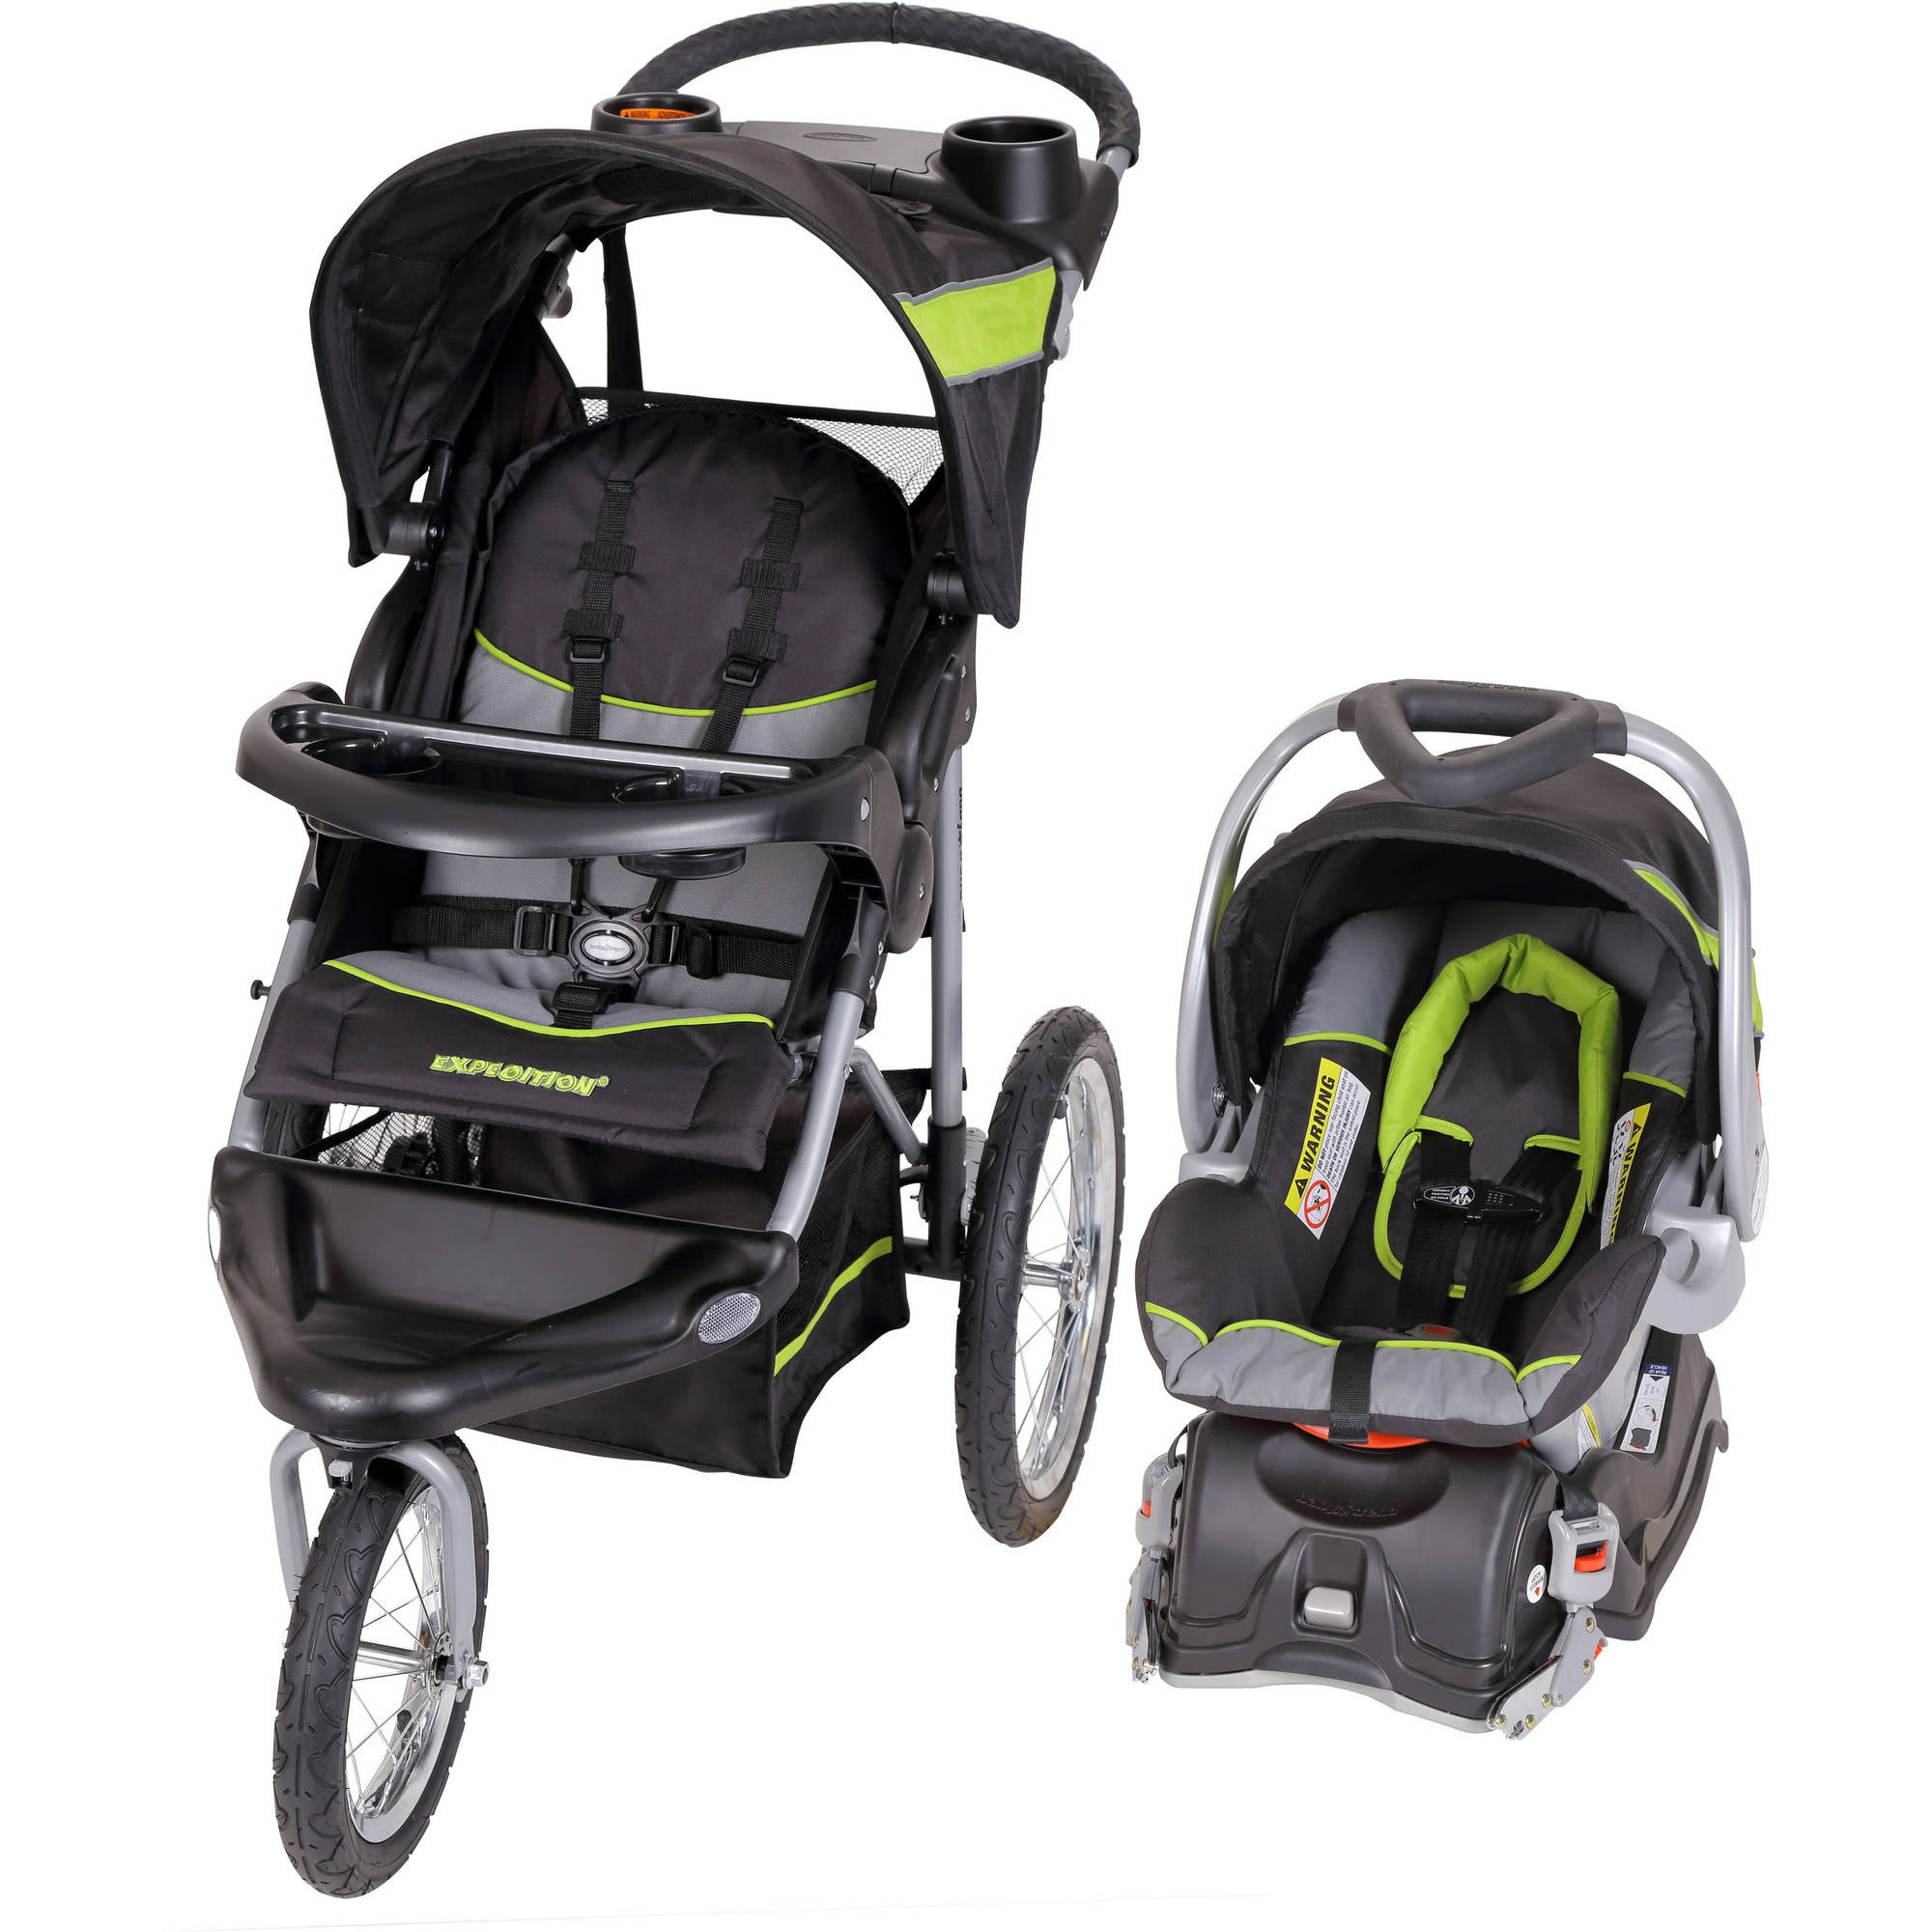 baby trend velocity stroller